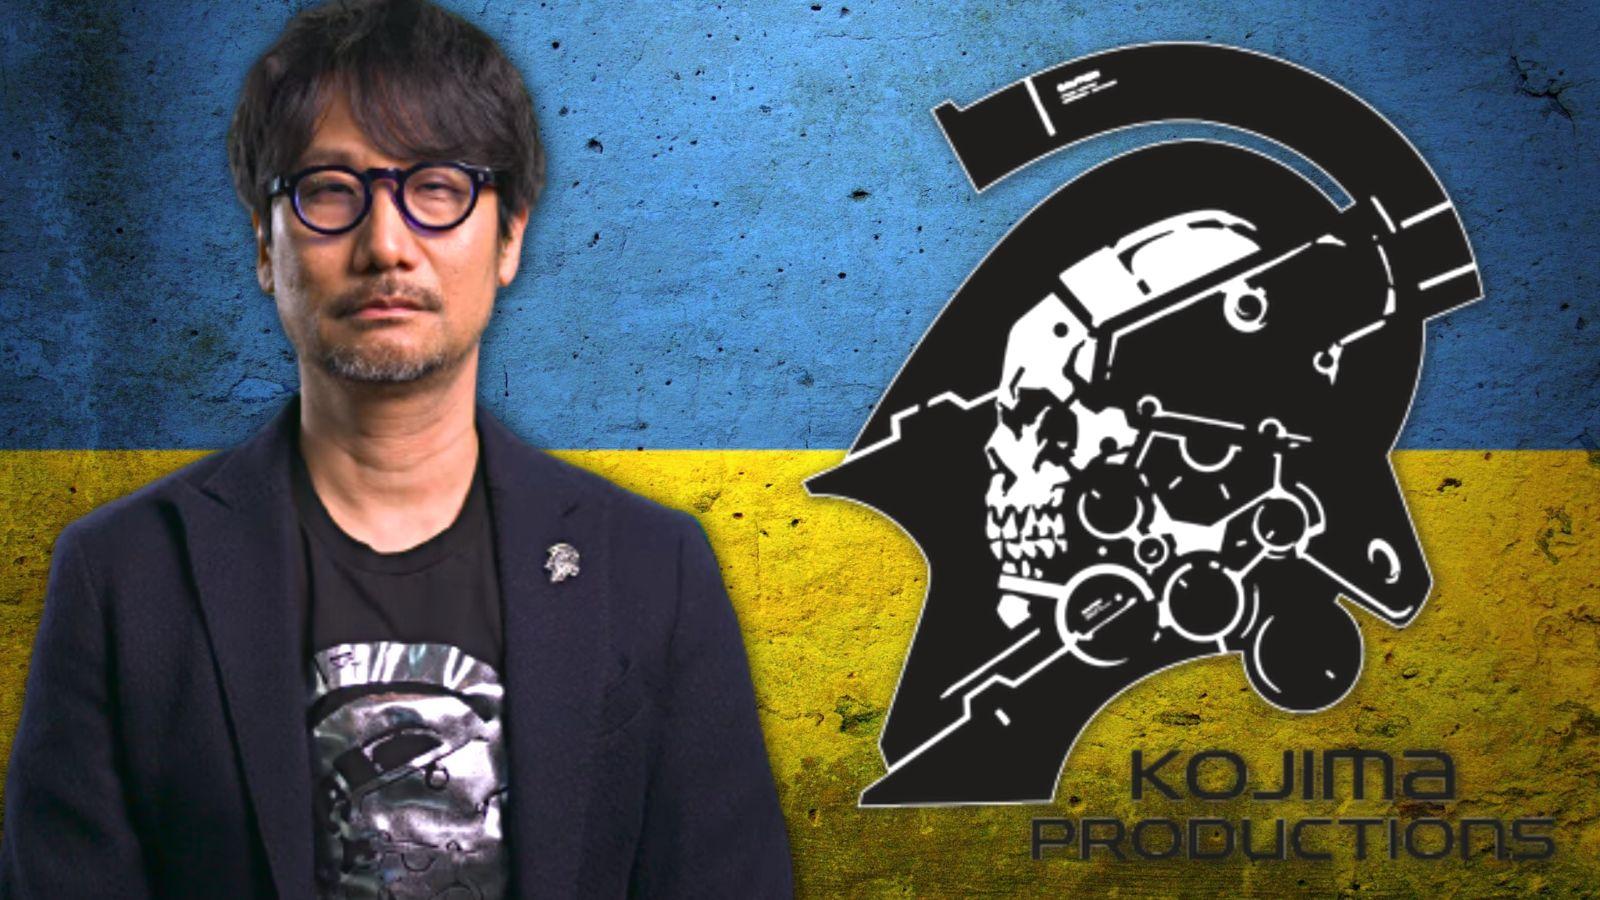 Hideo Kojima's Death Stranding movie: New cast, A24, plot details,  everything we know - Dexerto